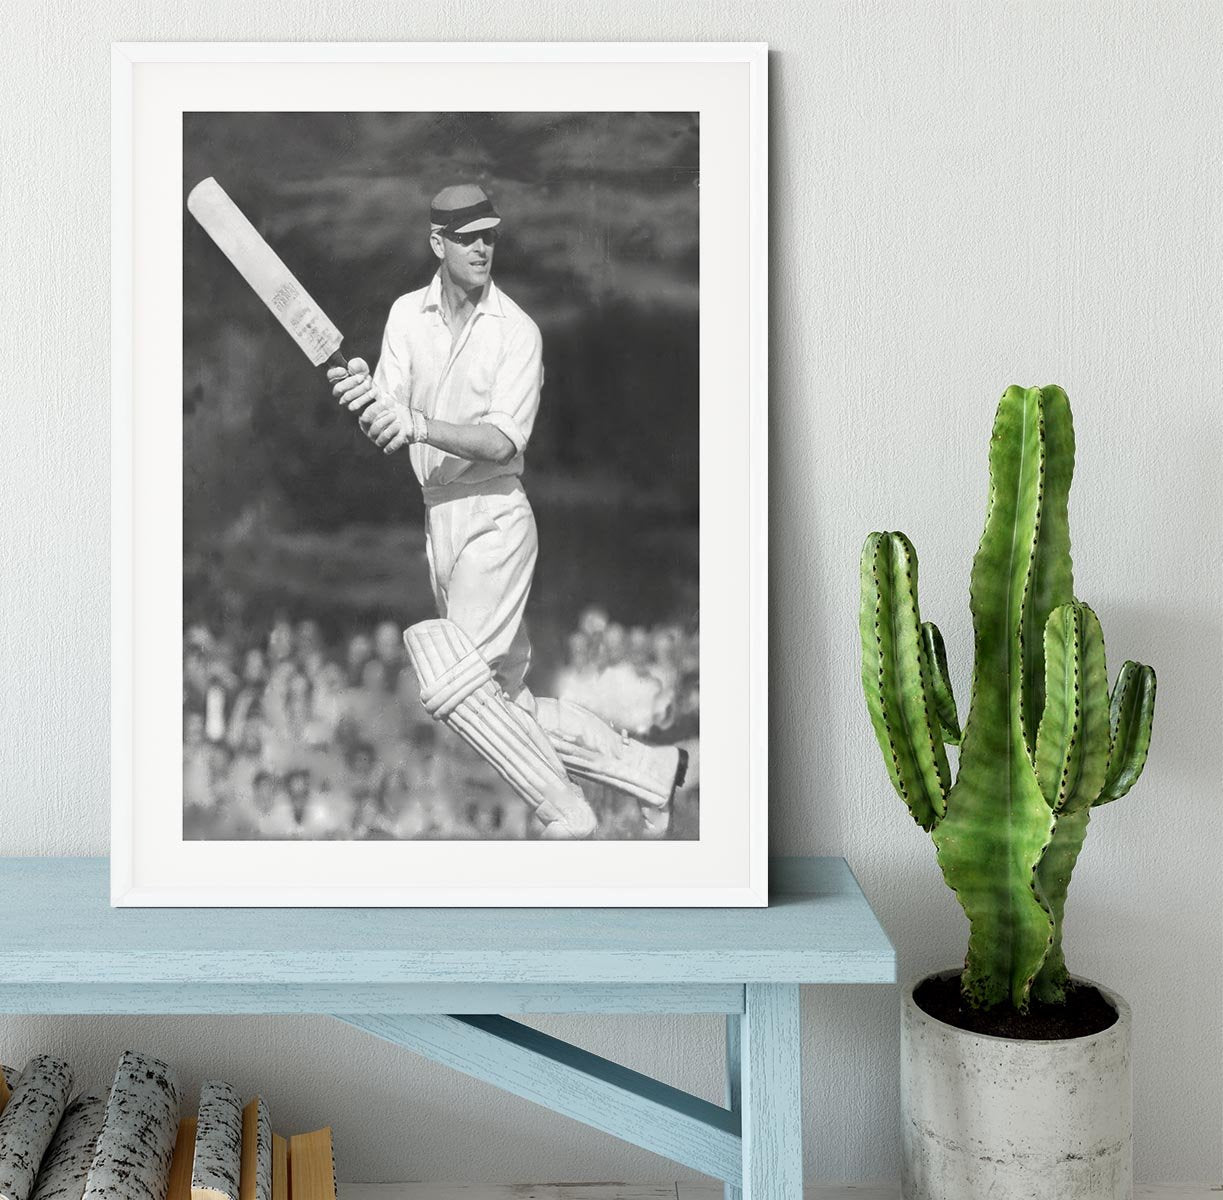 Prince Philip batting at a charity cricket match Framed Print - Canvas Art Rocks - 5